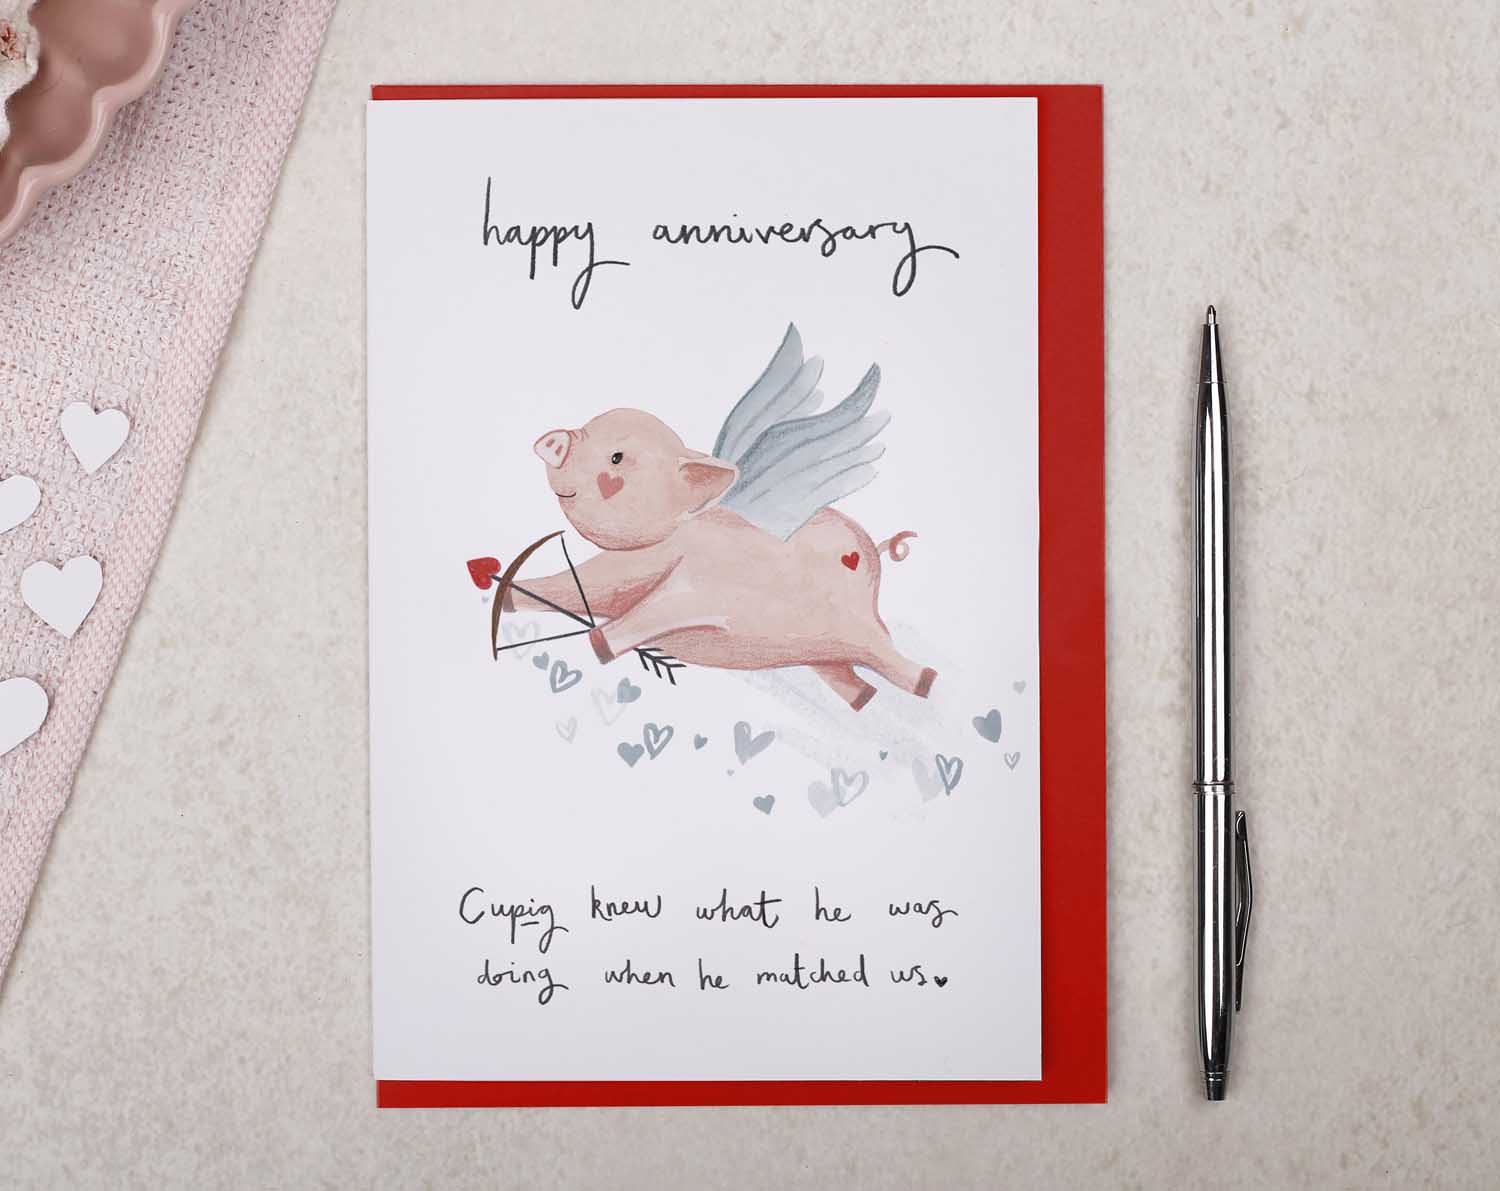 Cute Cupid Pig Anniversary Card